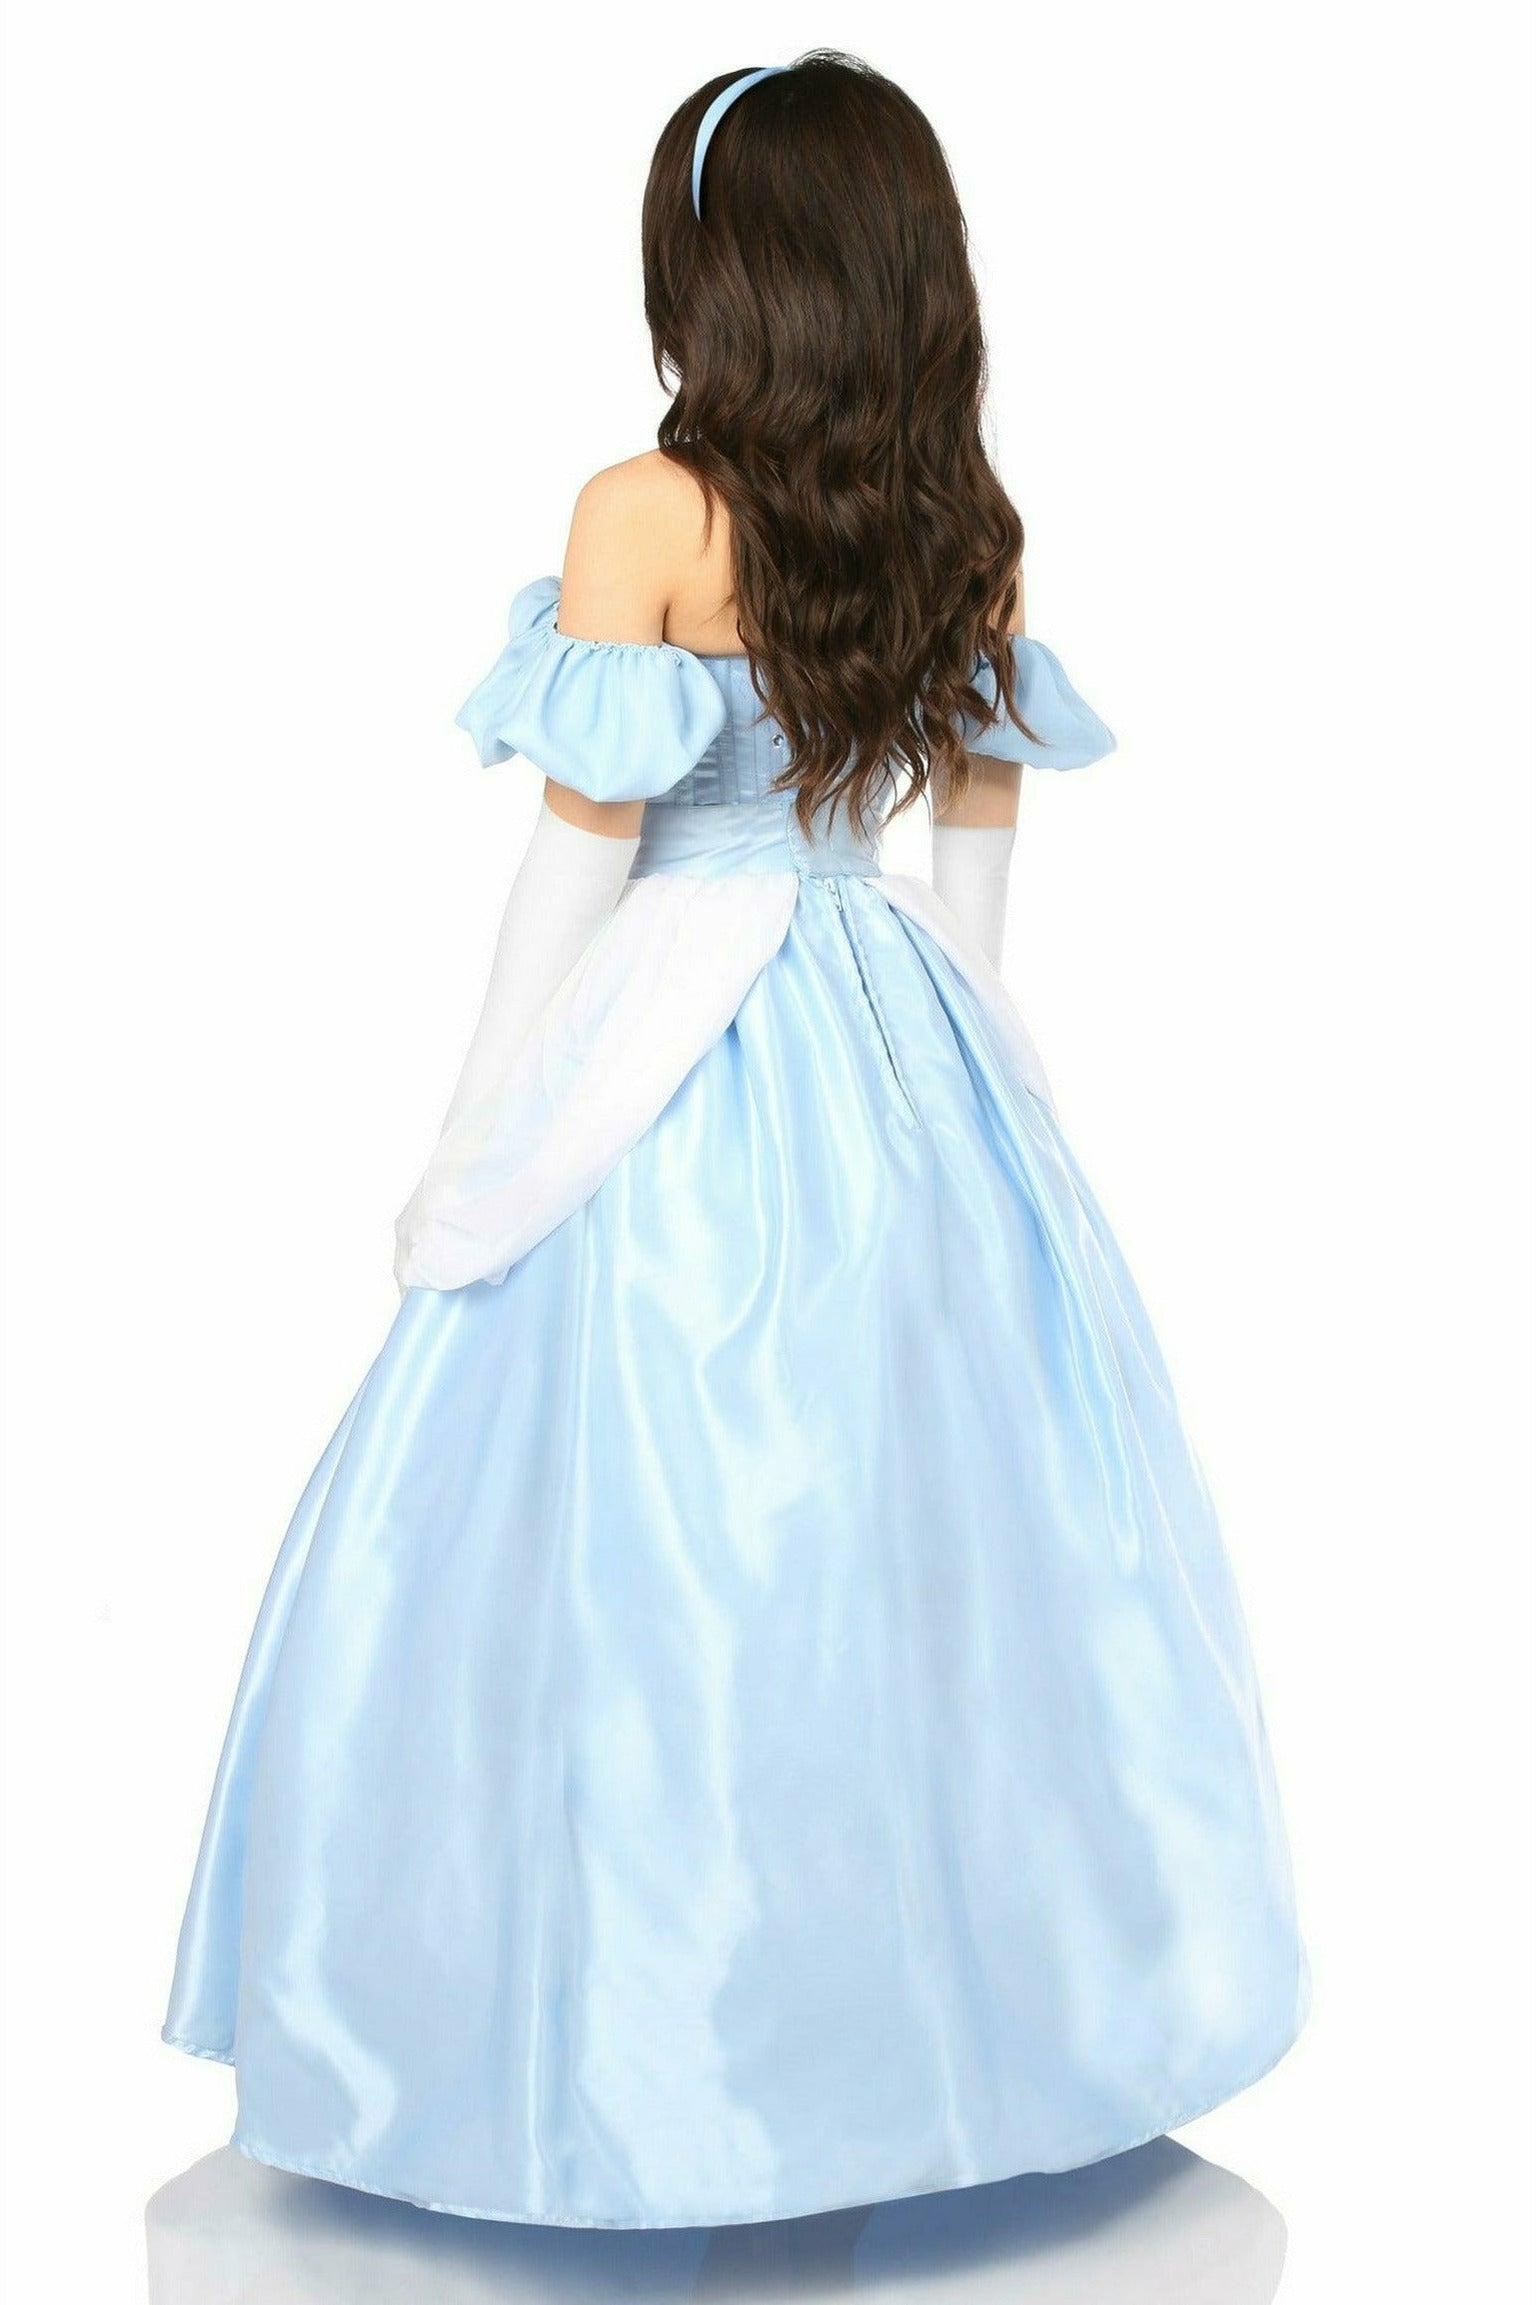 Top Drawer 6 PC Fairytale Princess Corset Costume - Daisy Corsets